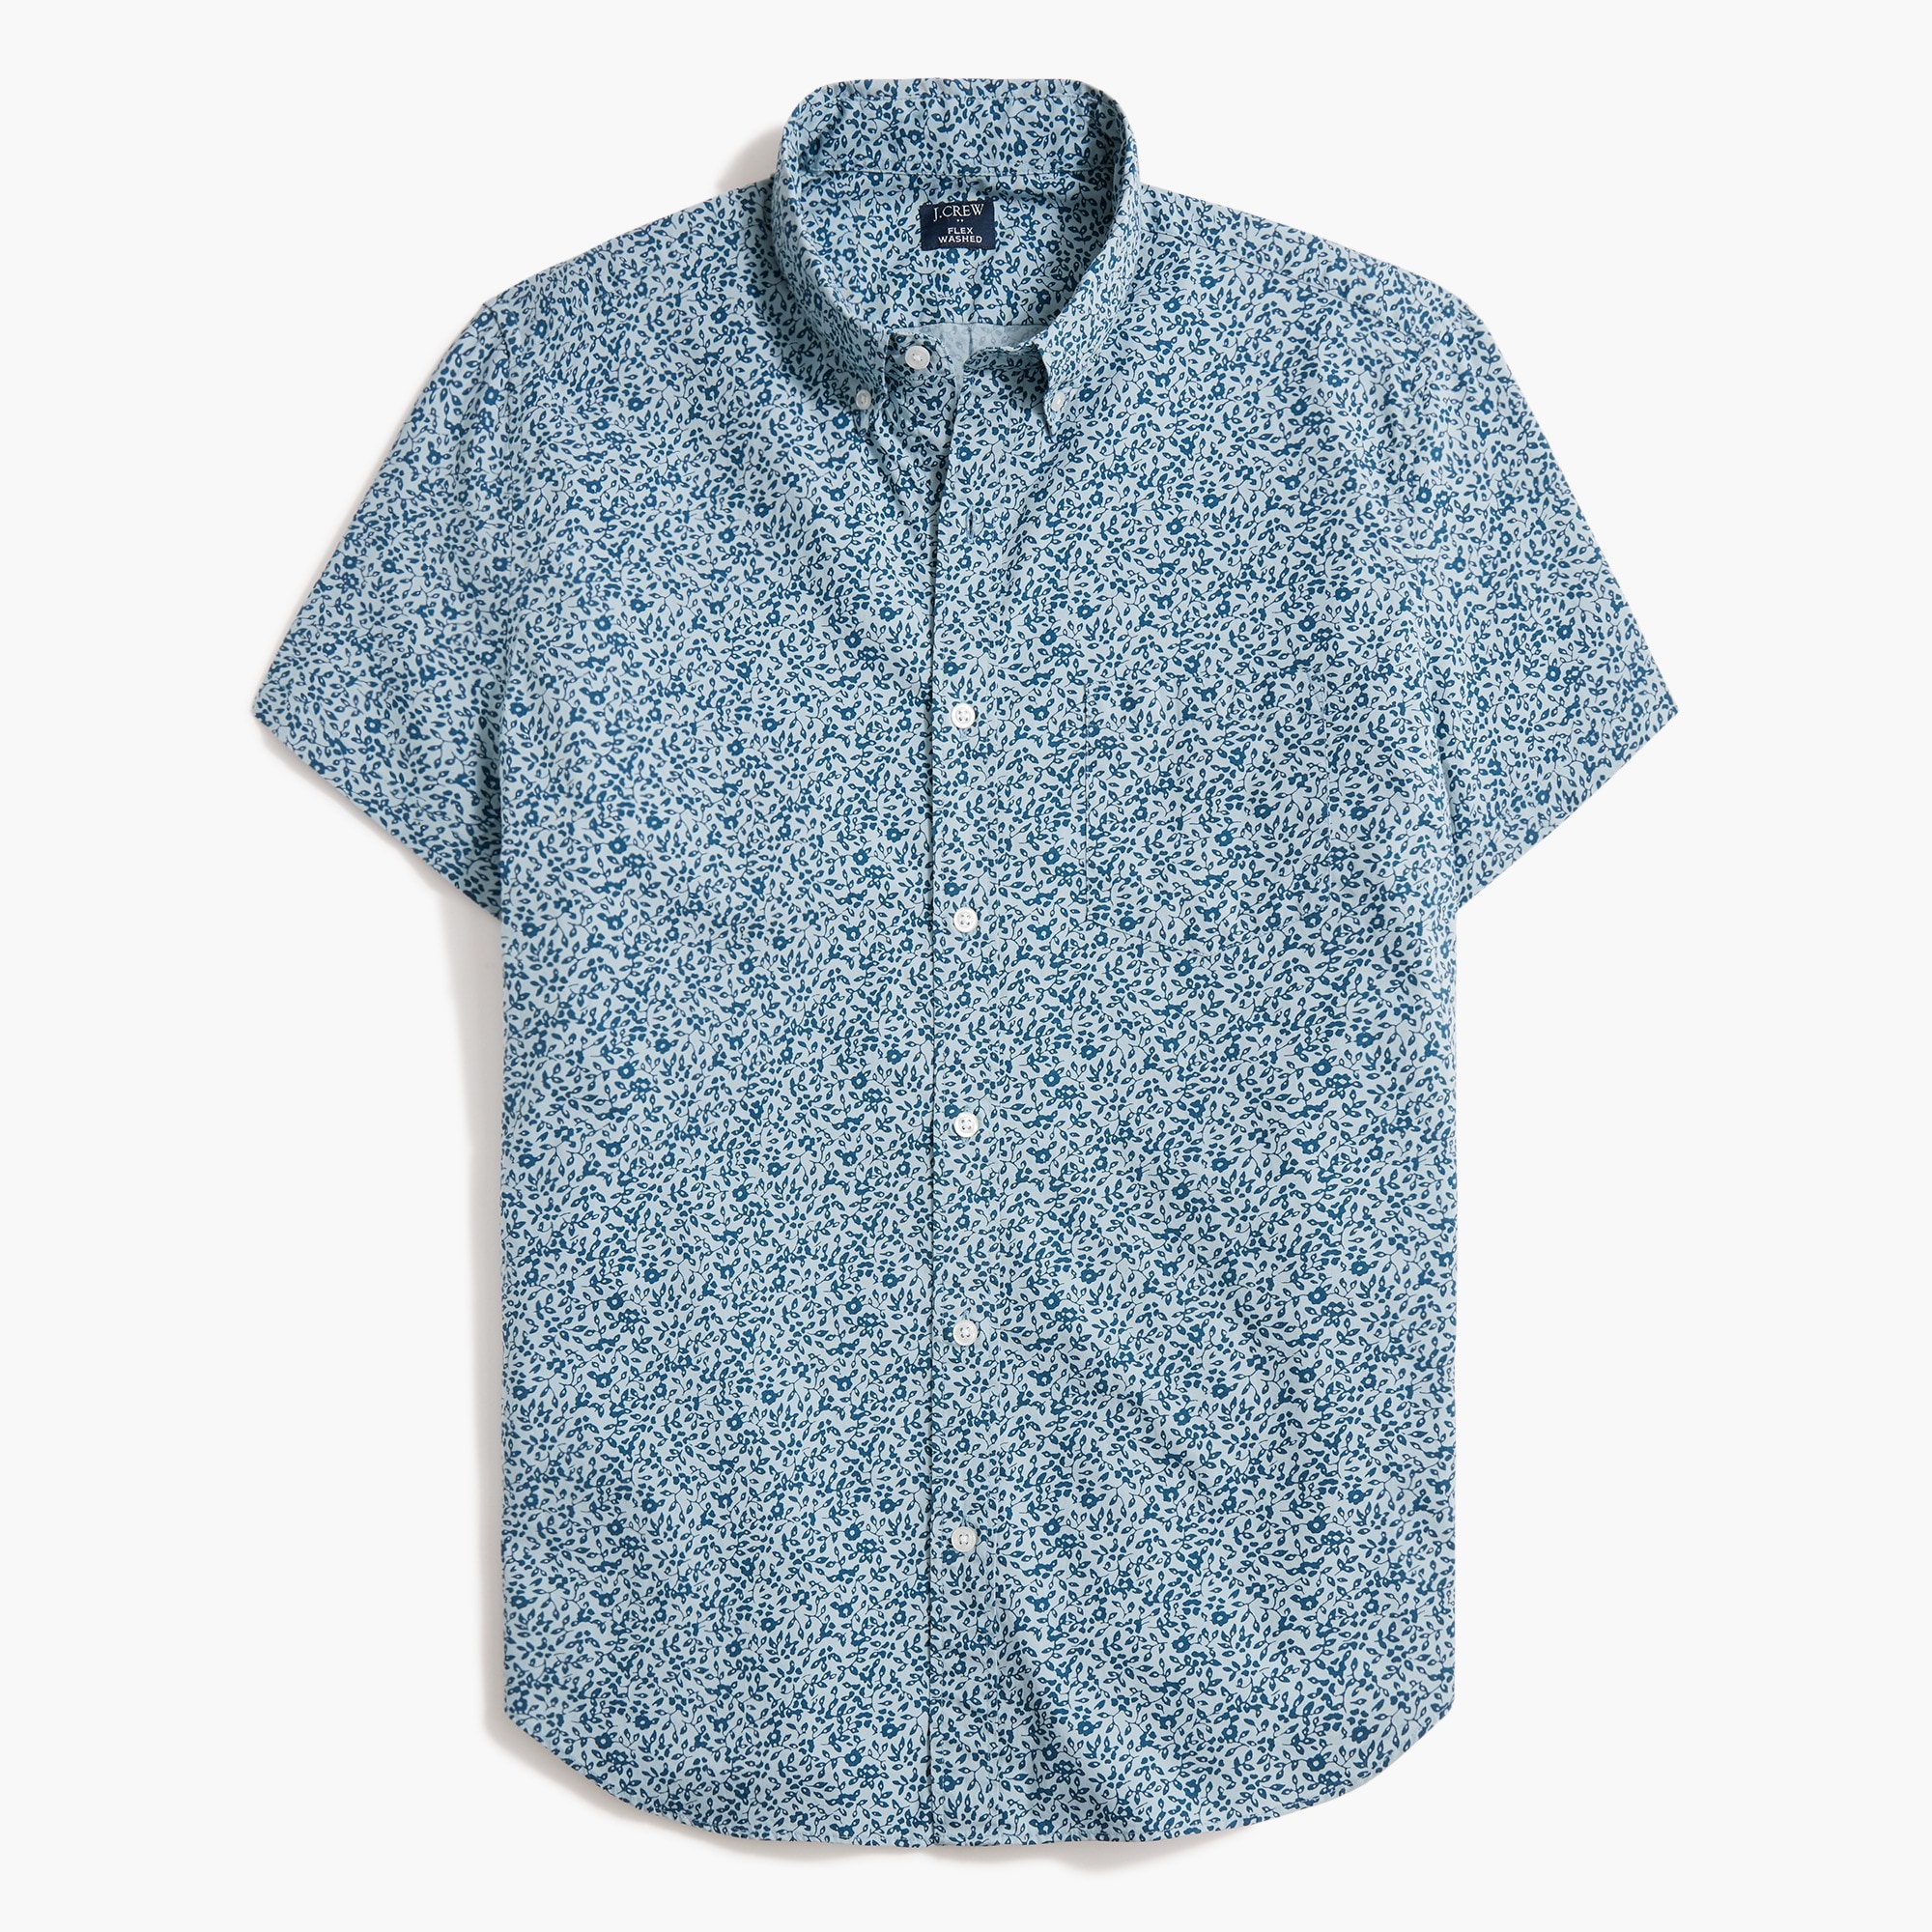  Short-sleeve printed flex casual shirt